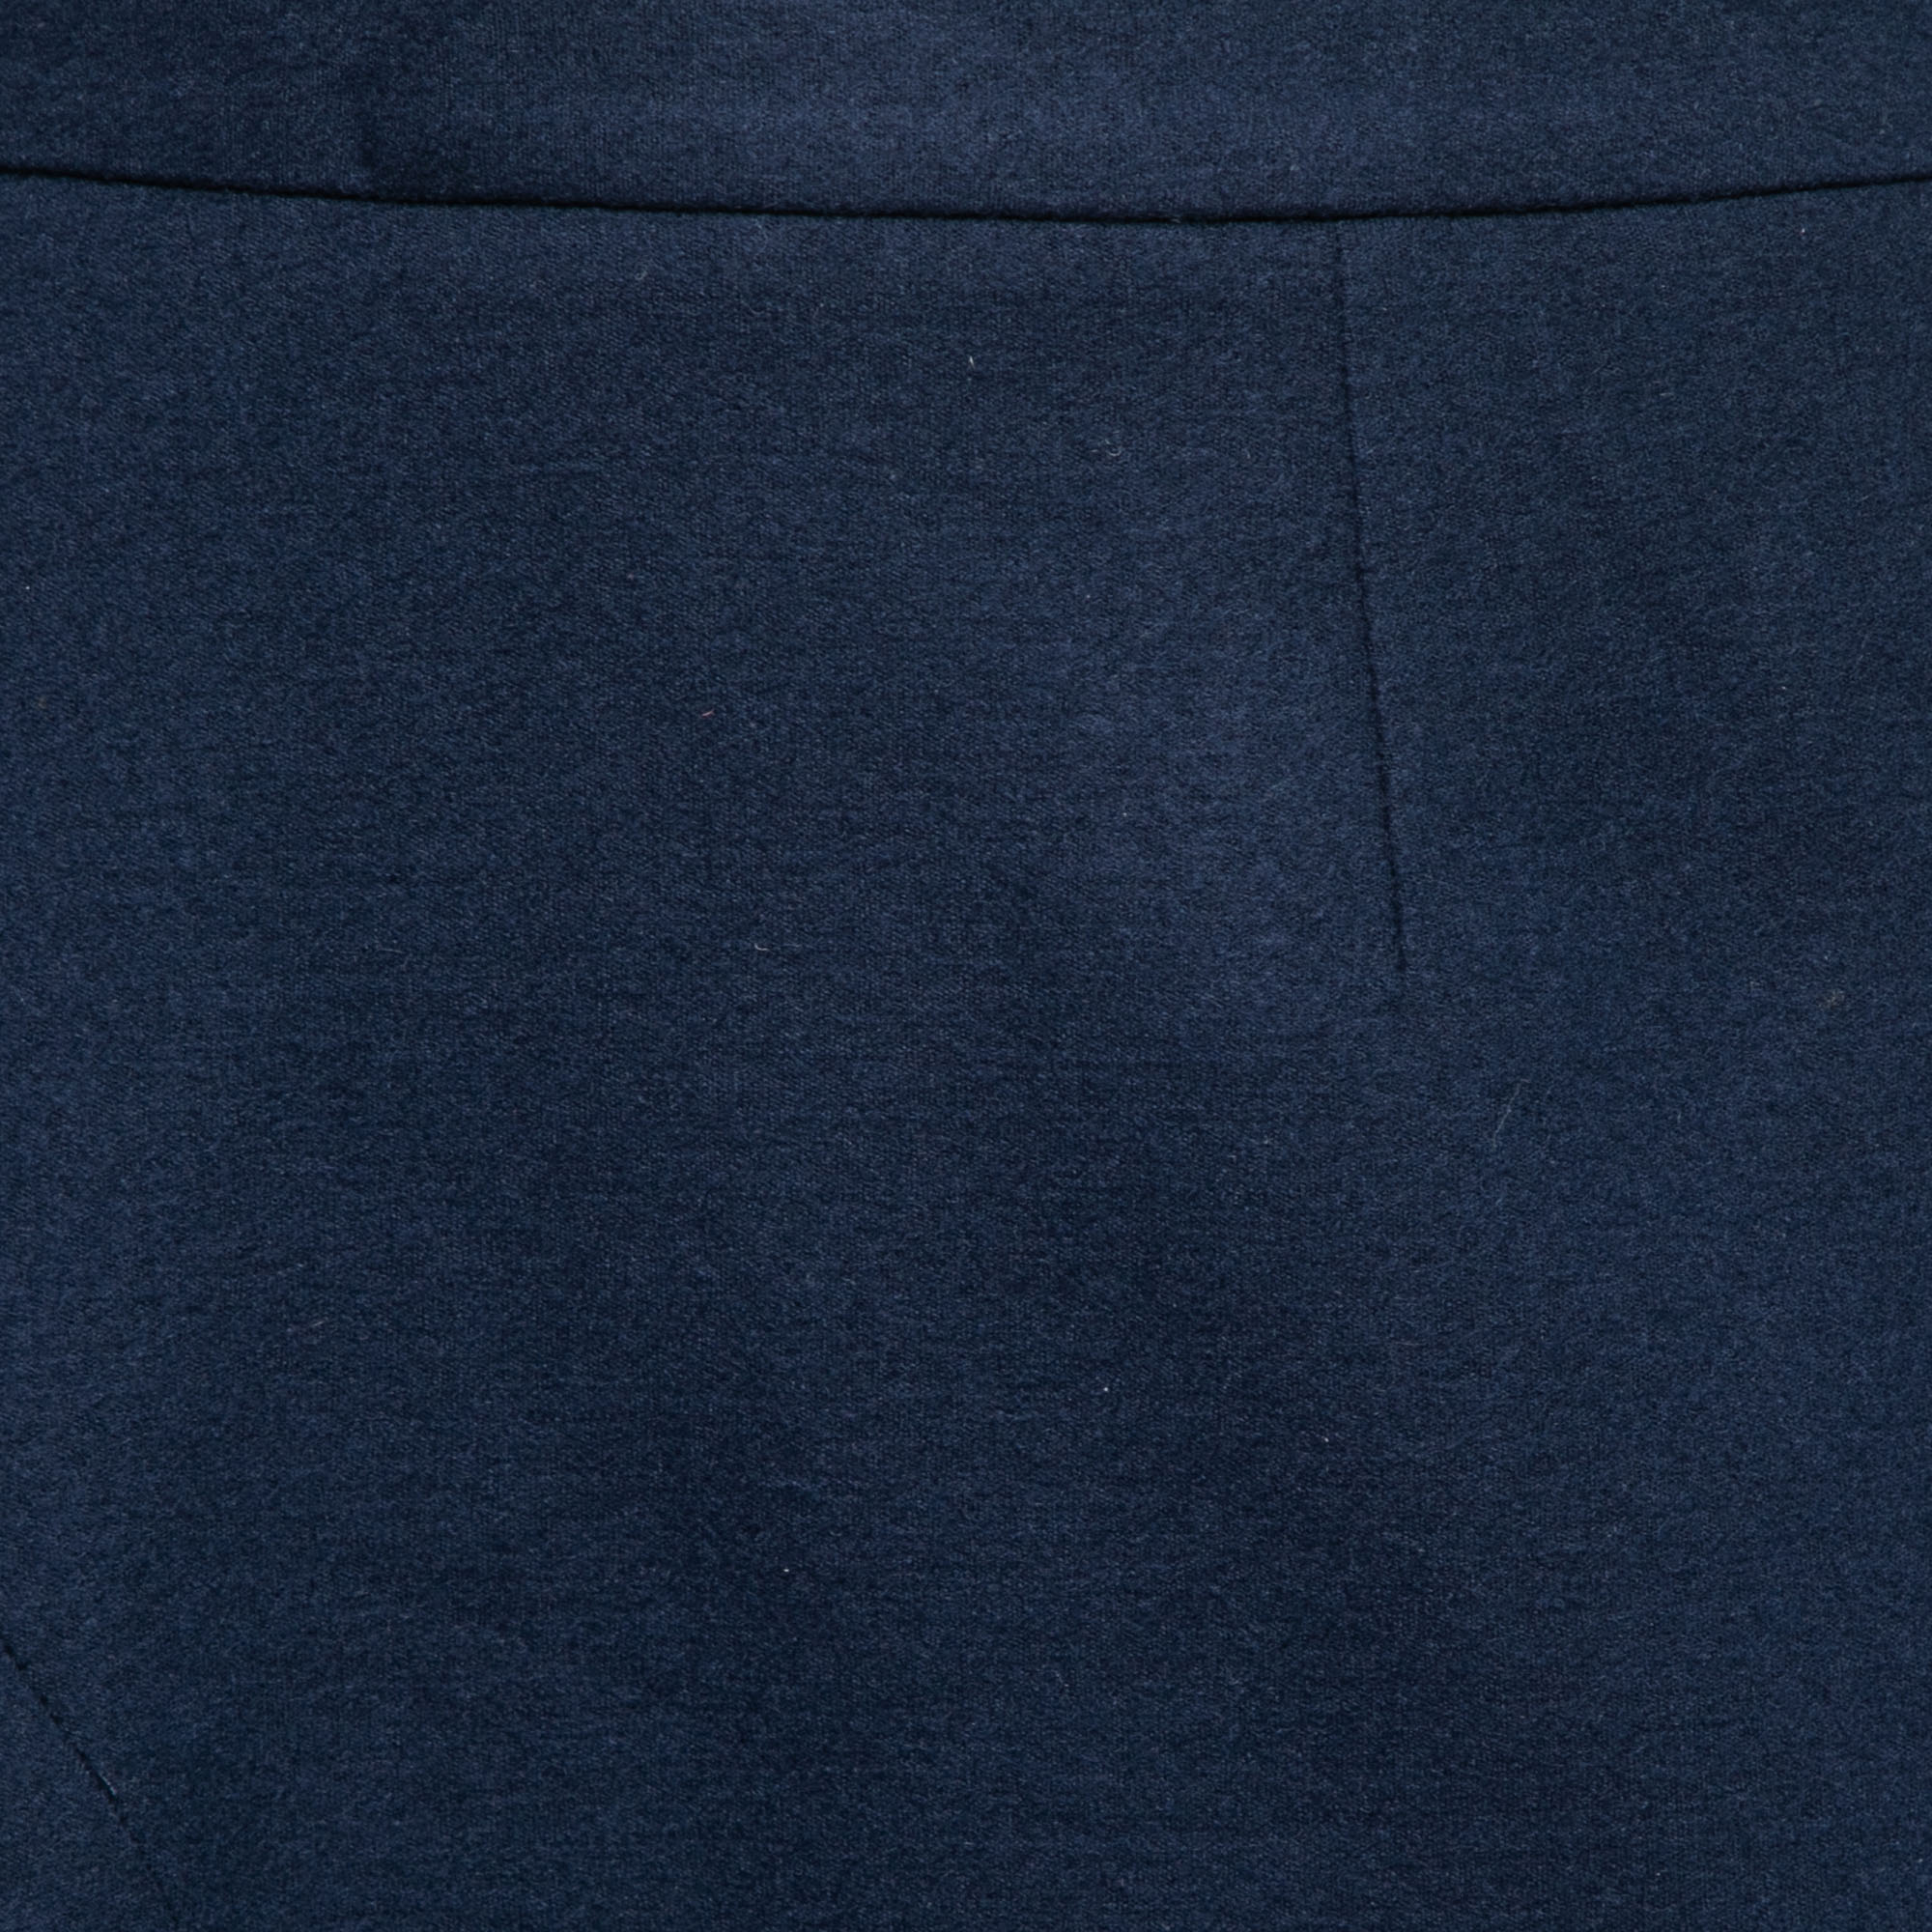 CH Carolina Herrera Navy Blue Wool Knee Length Skirt S